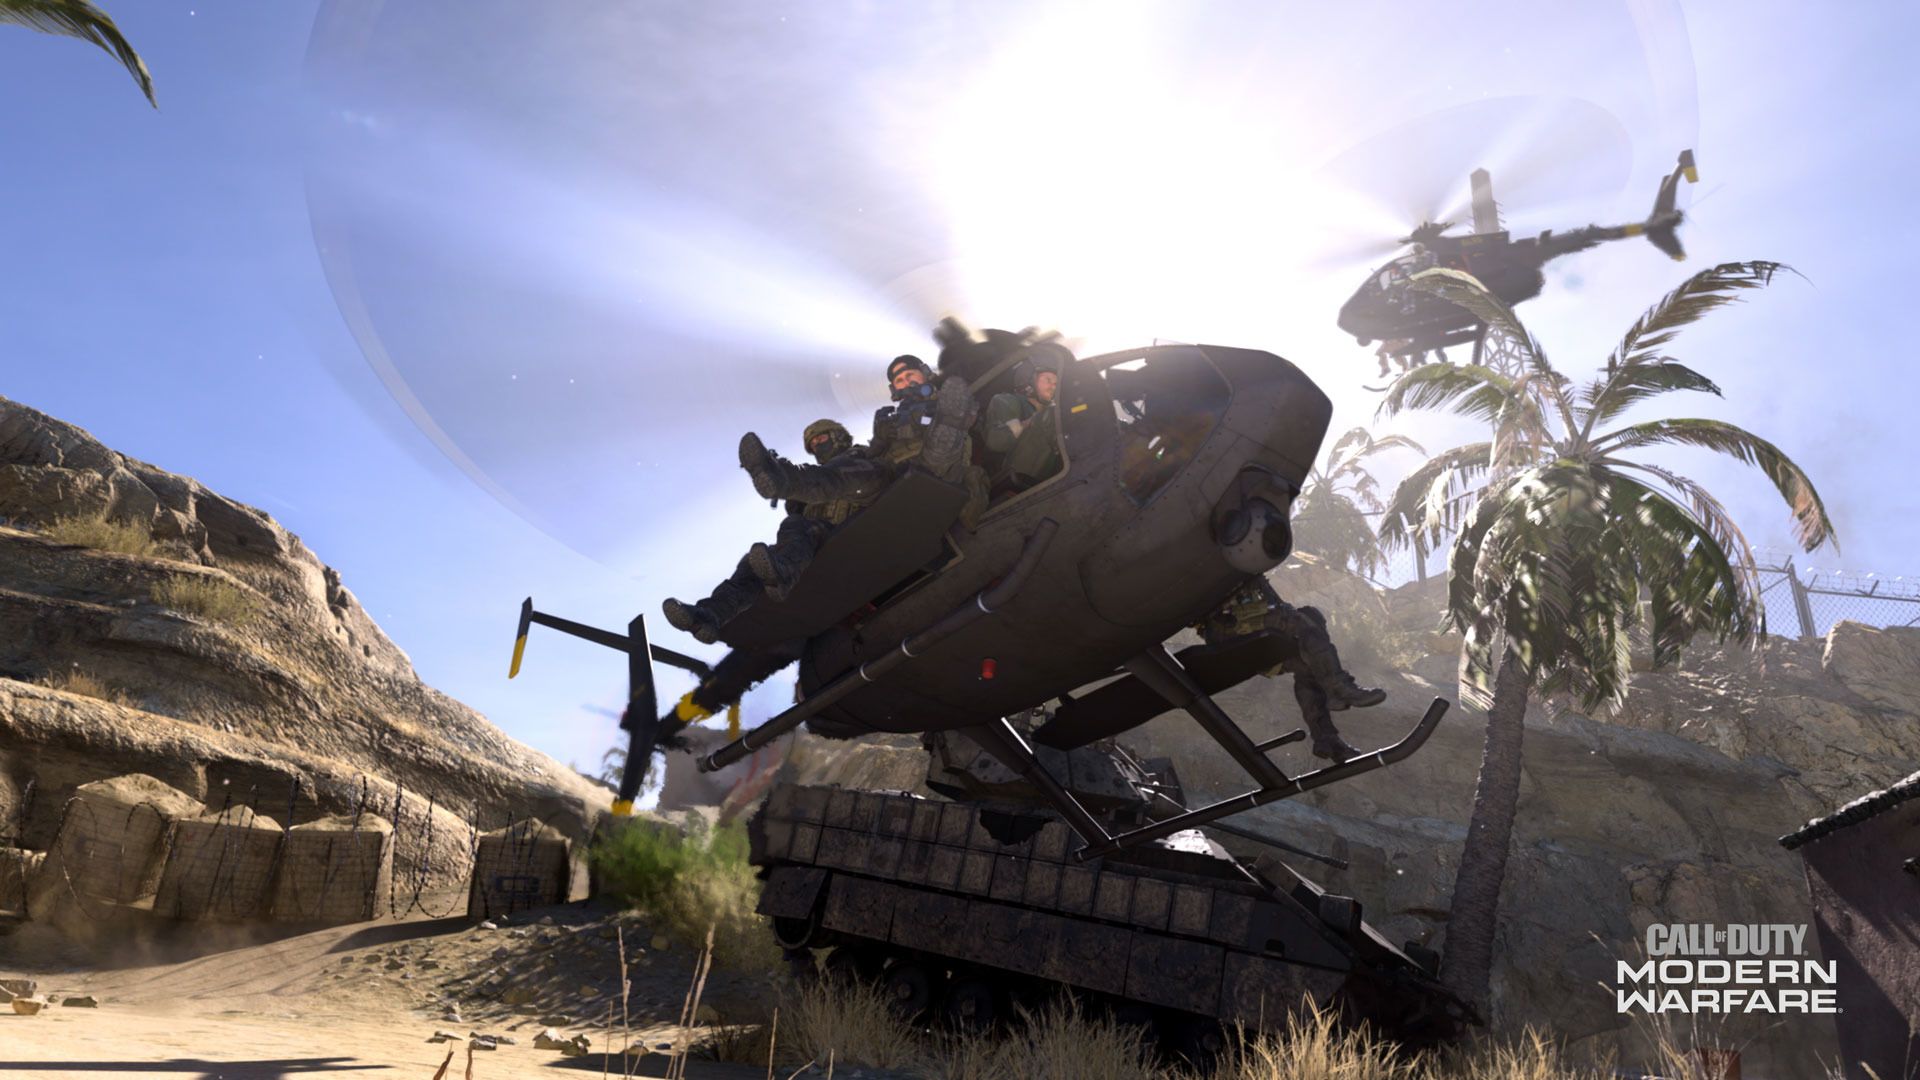 The Call of Duty Modern Warfare launch trailer is peak Call of Duty